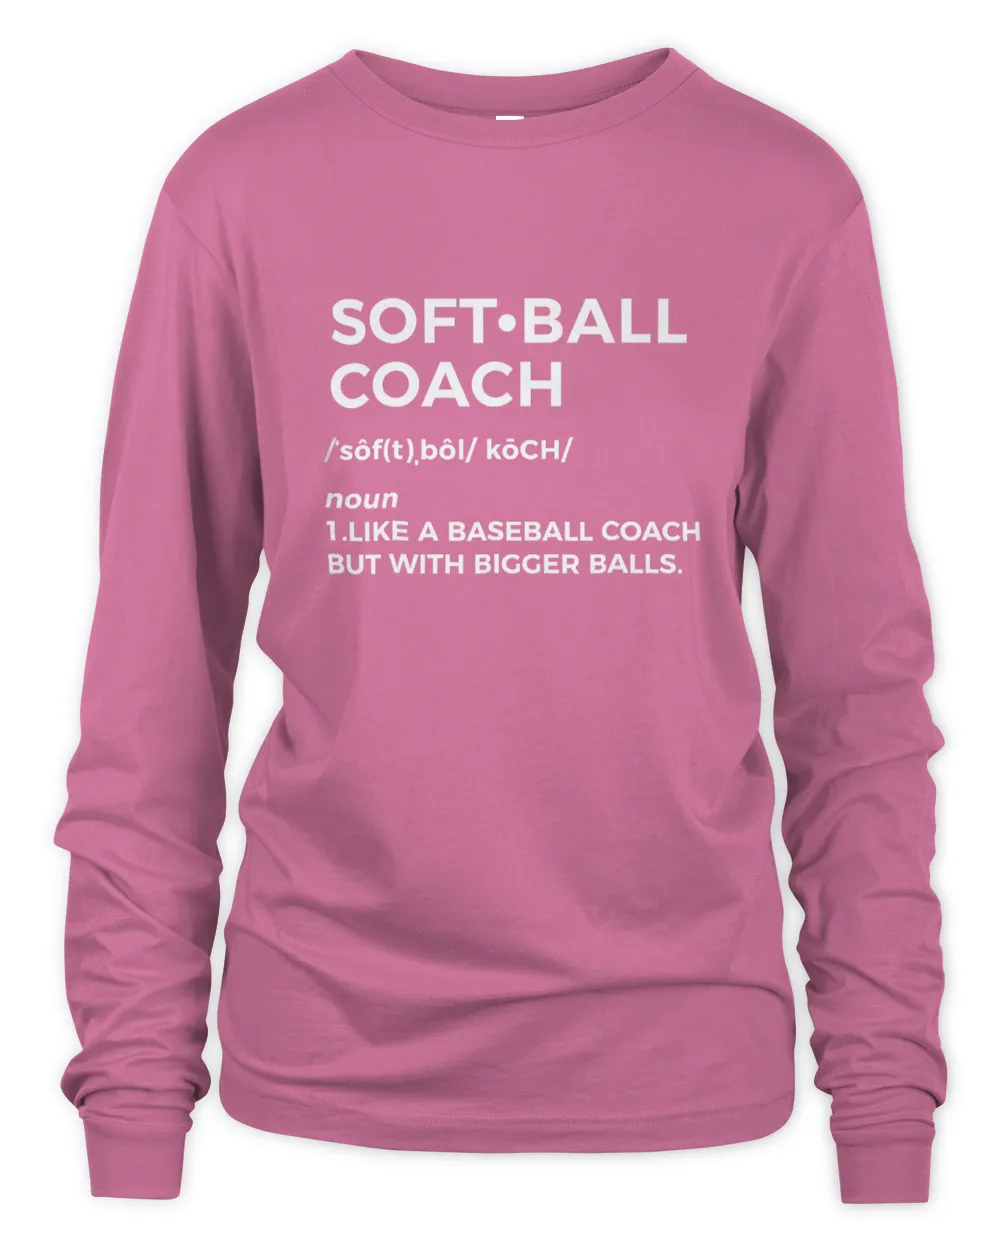 Funny Softball Coach Tshirt Gift - Softball Coach Tee